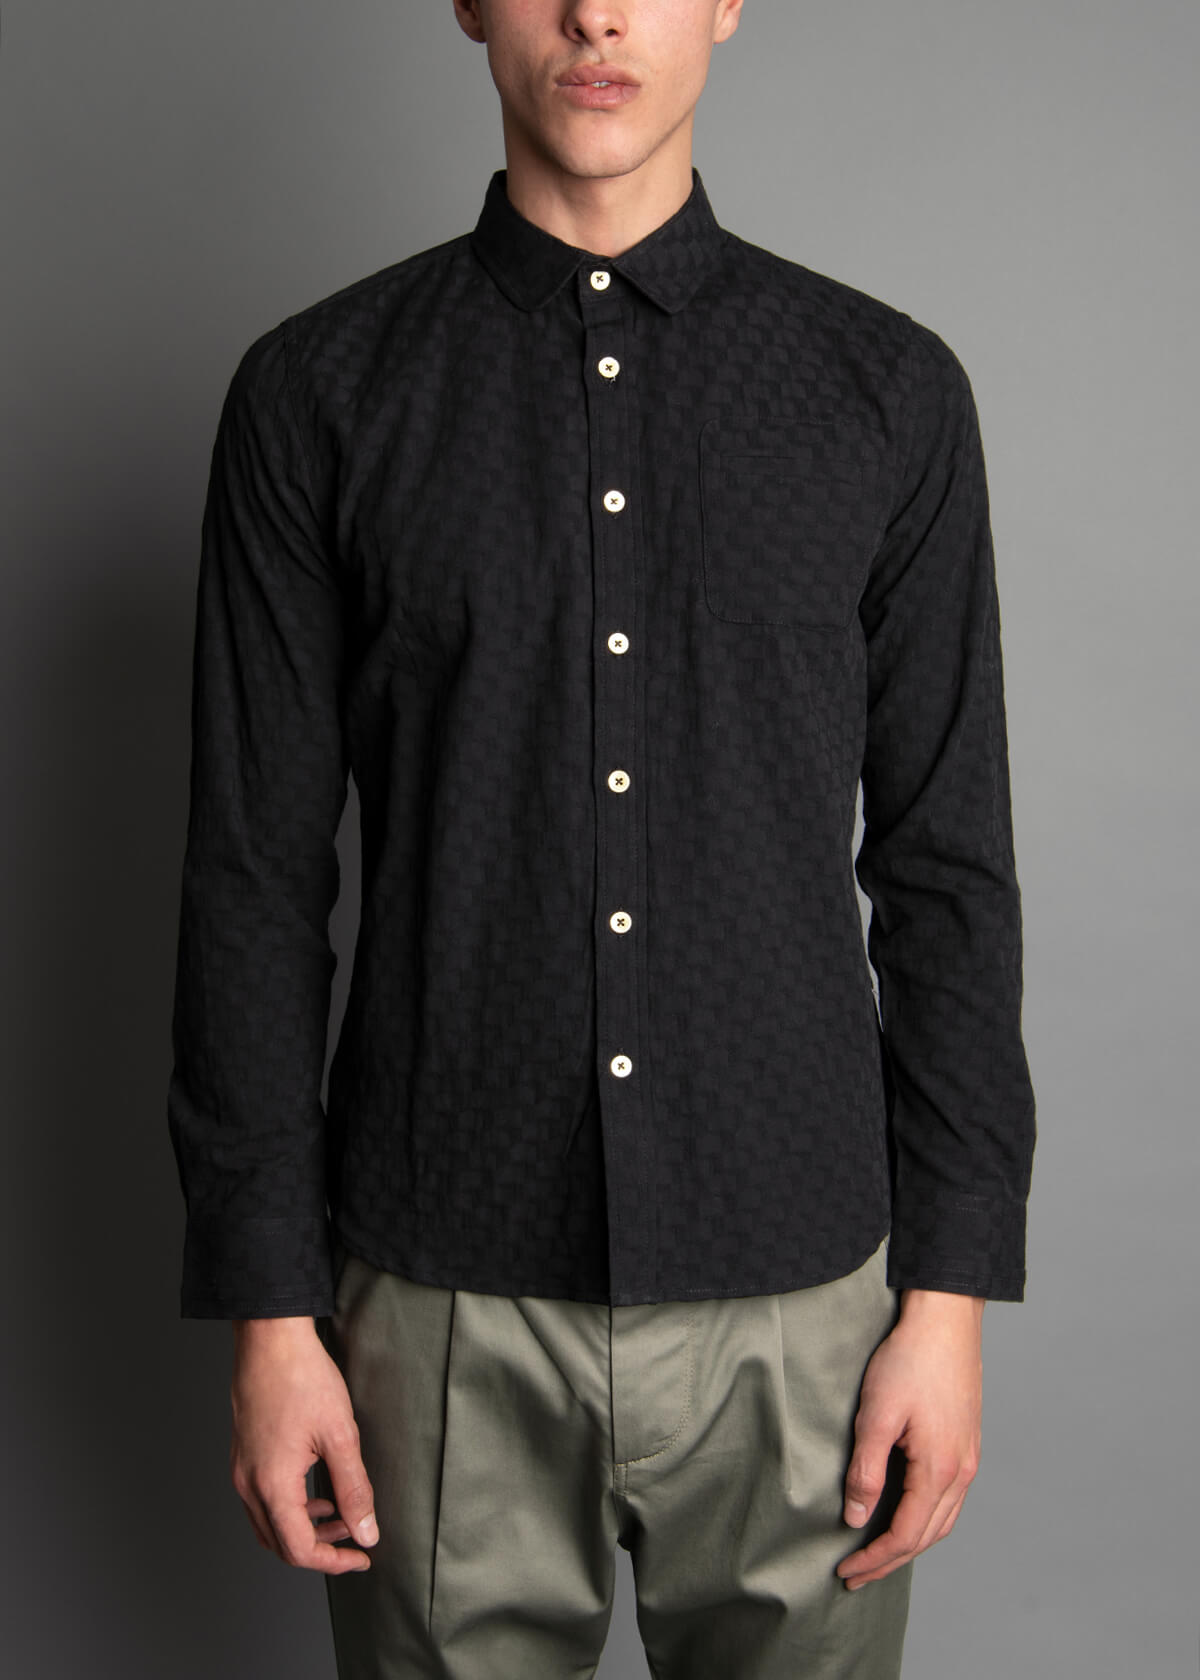 black premium cotton jacquard men's shirt